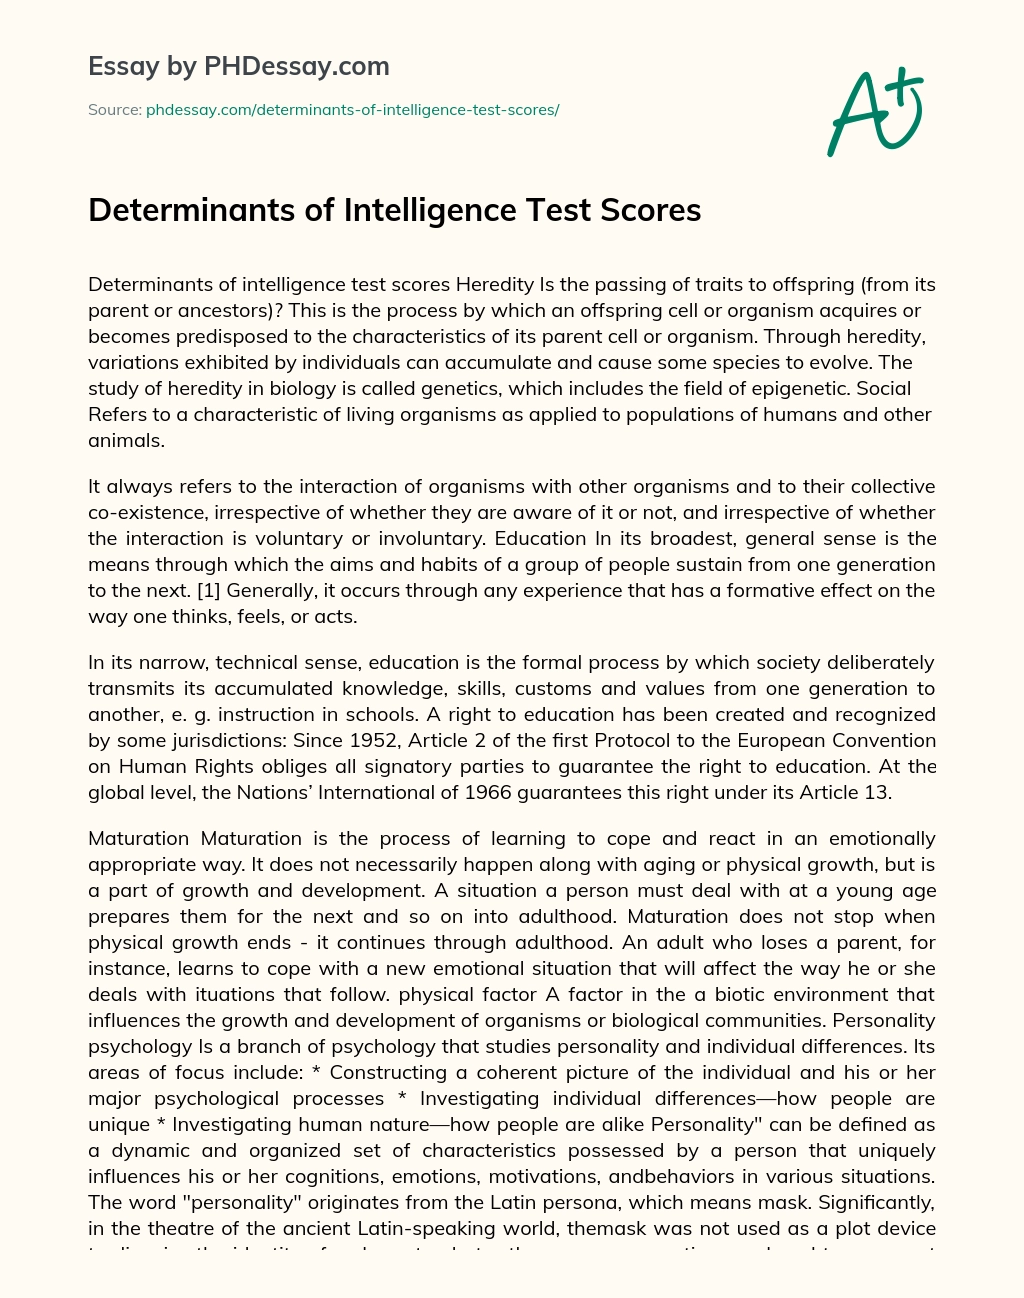 Determinants of Intelligence Test Scores essay